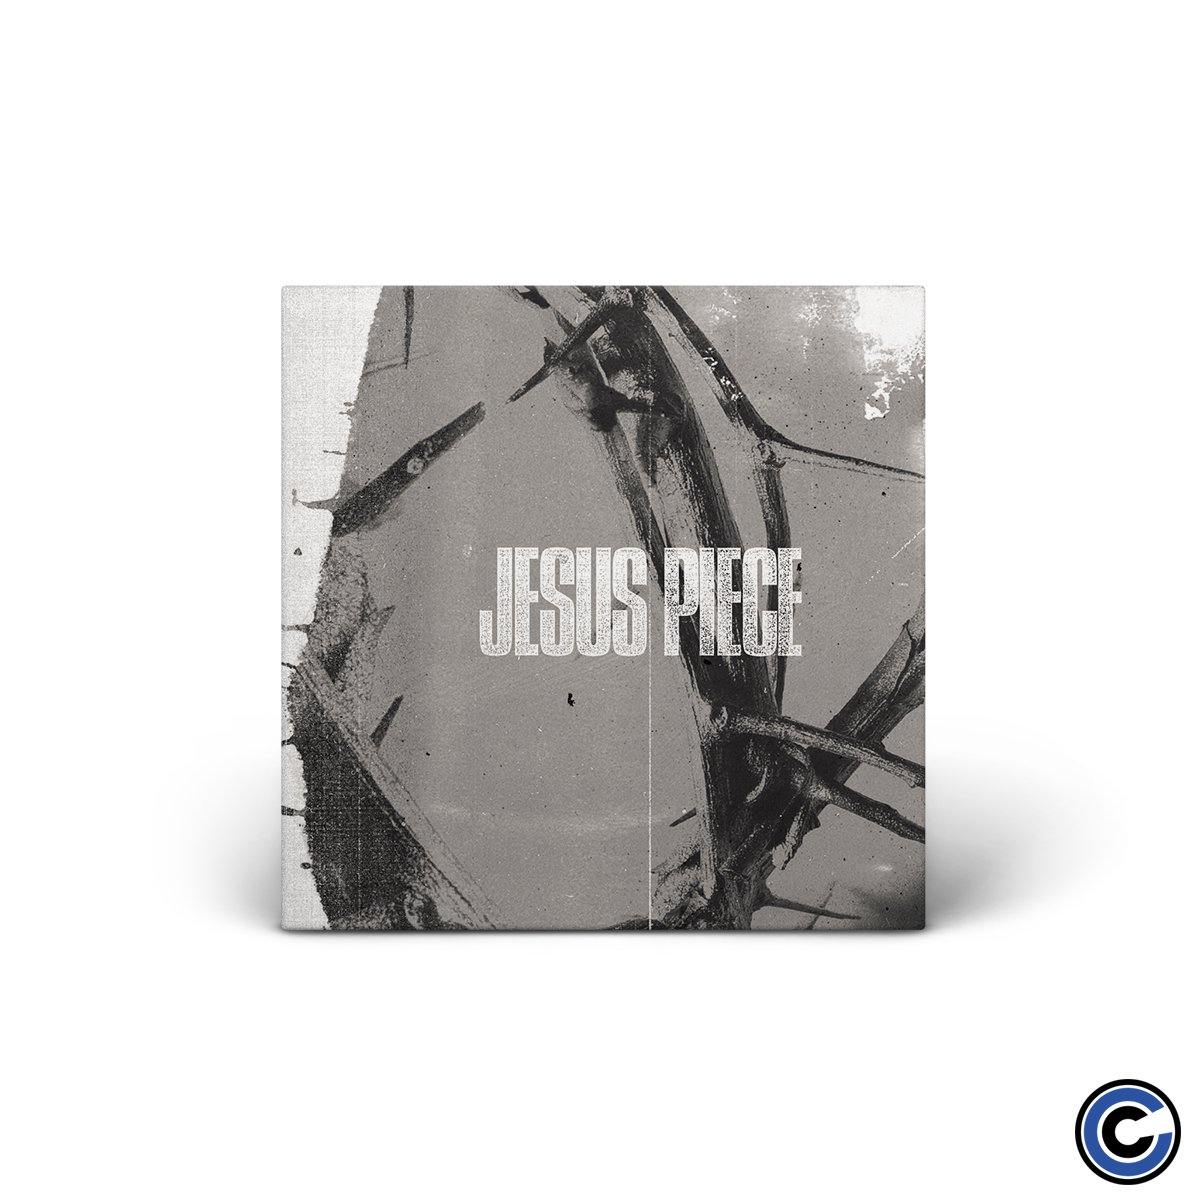 Buy – Jesus Piece "Jesus Piece" 7" – Band & Music Merch – Cold Cuts Merch